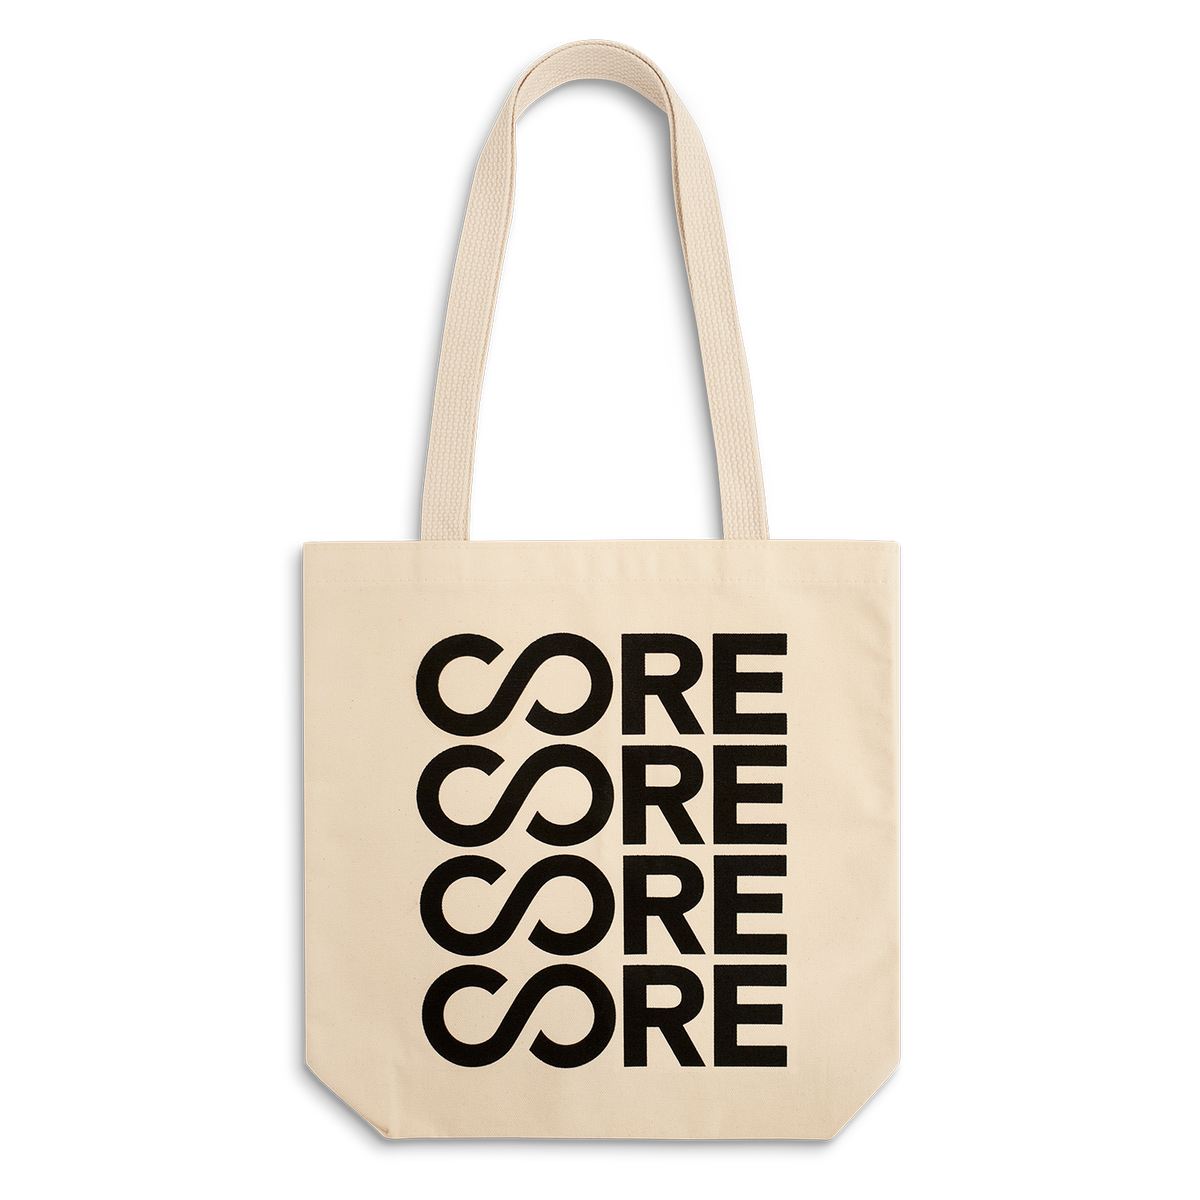 Our Classic Core handbags look amazing on the new PB Korea website